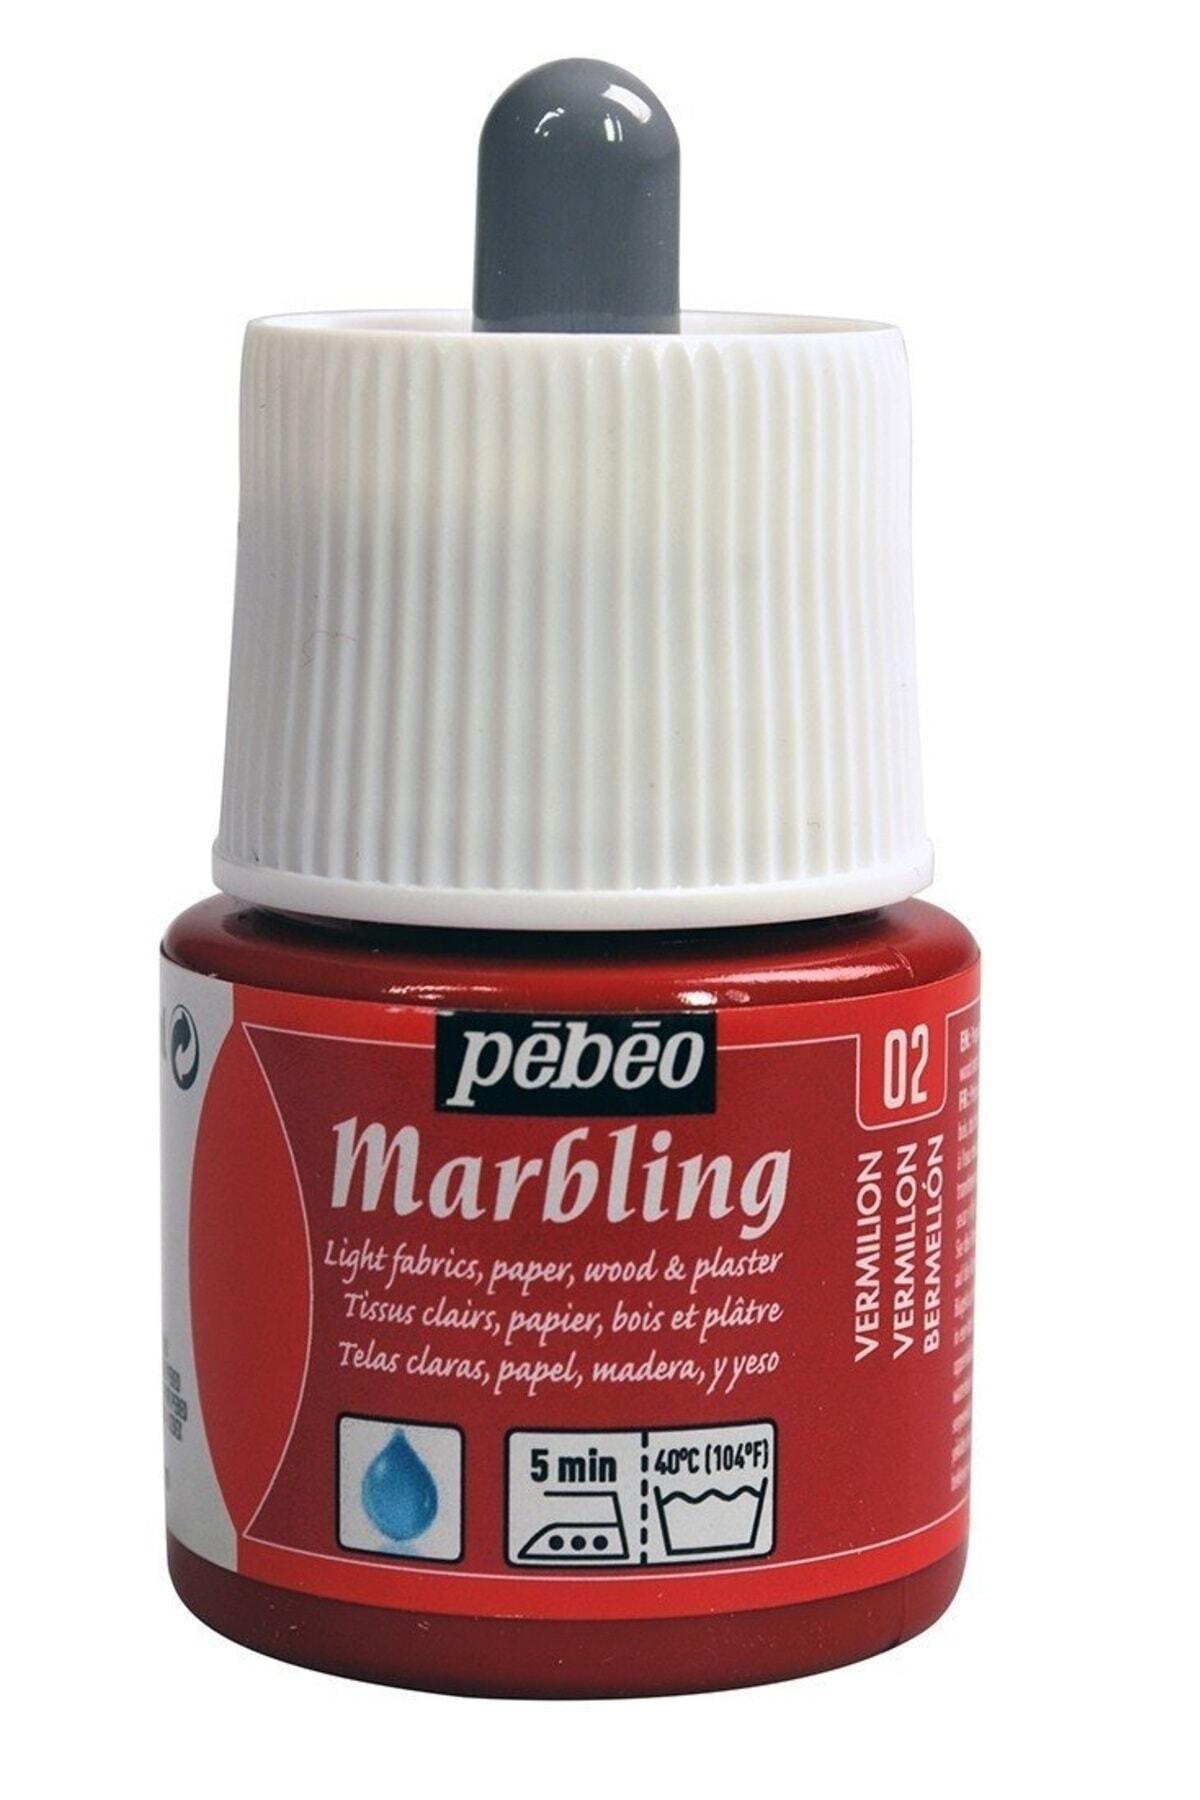 Pebeo Marbling Ebru Boyası 45ml 02 Vermillion